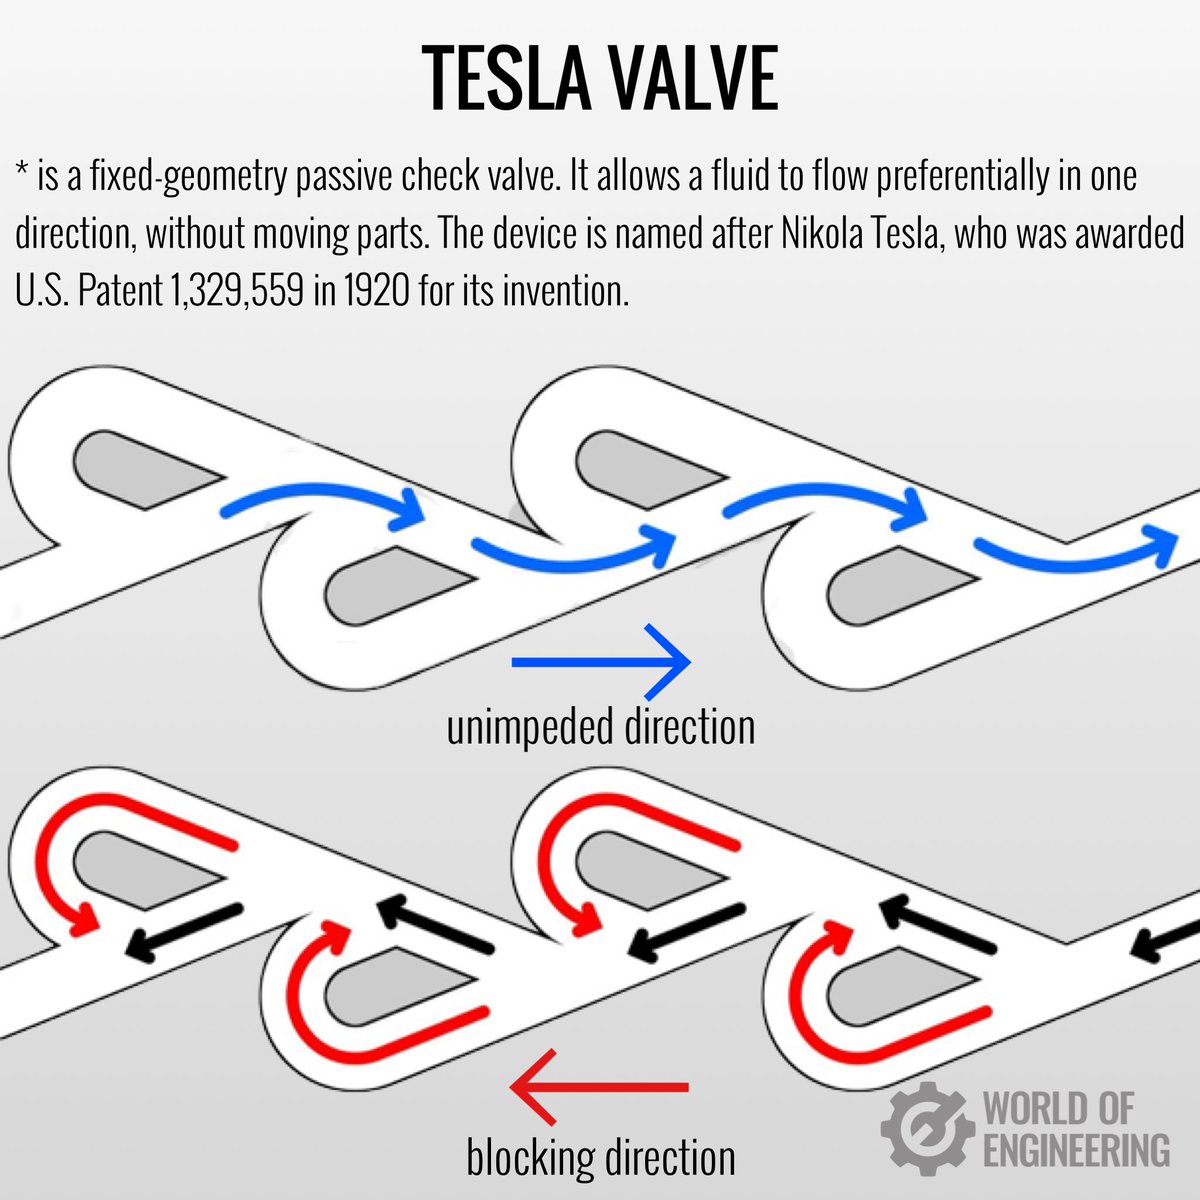 Tesla valve